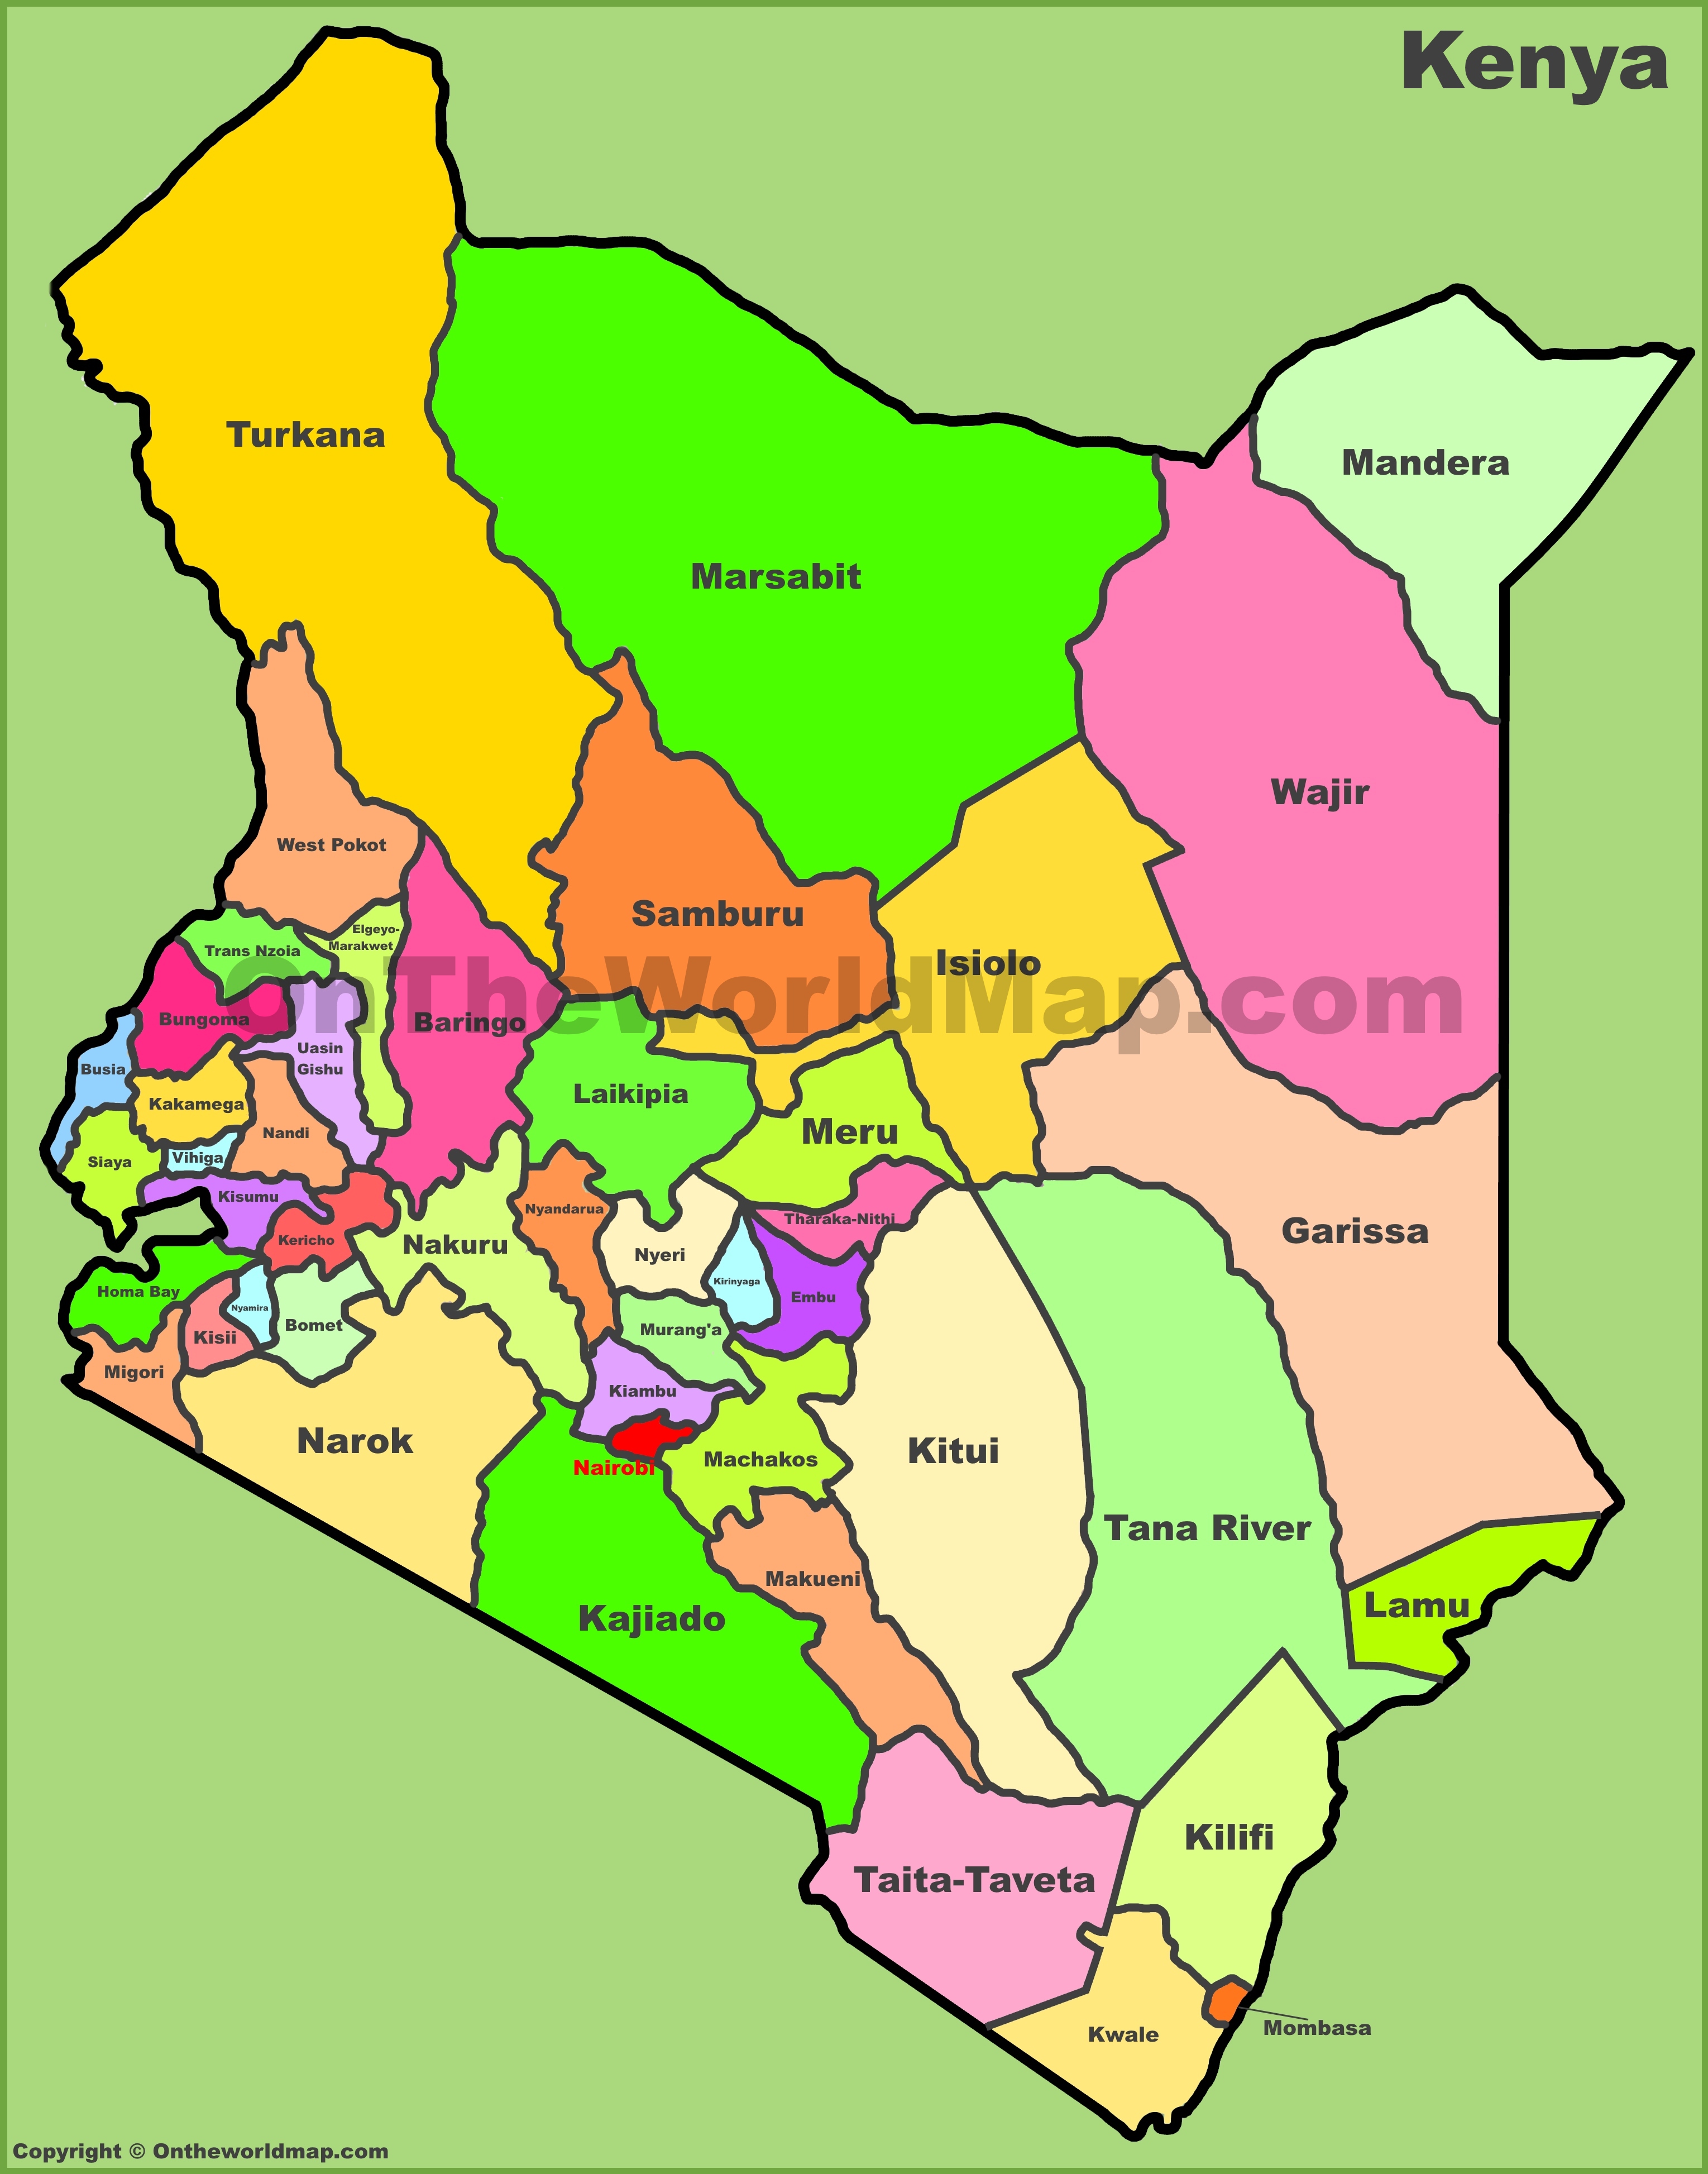 Kenya Administrative Units Map